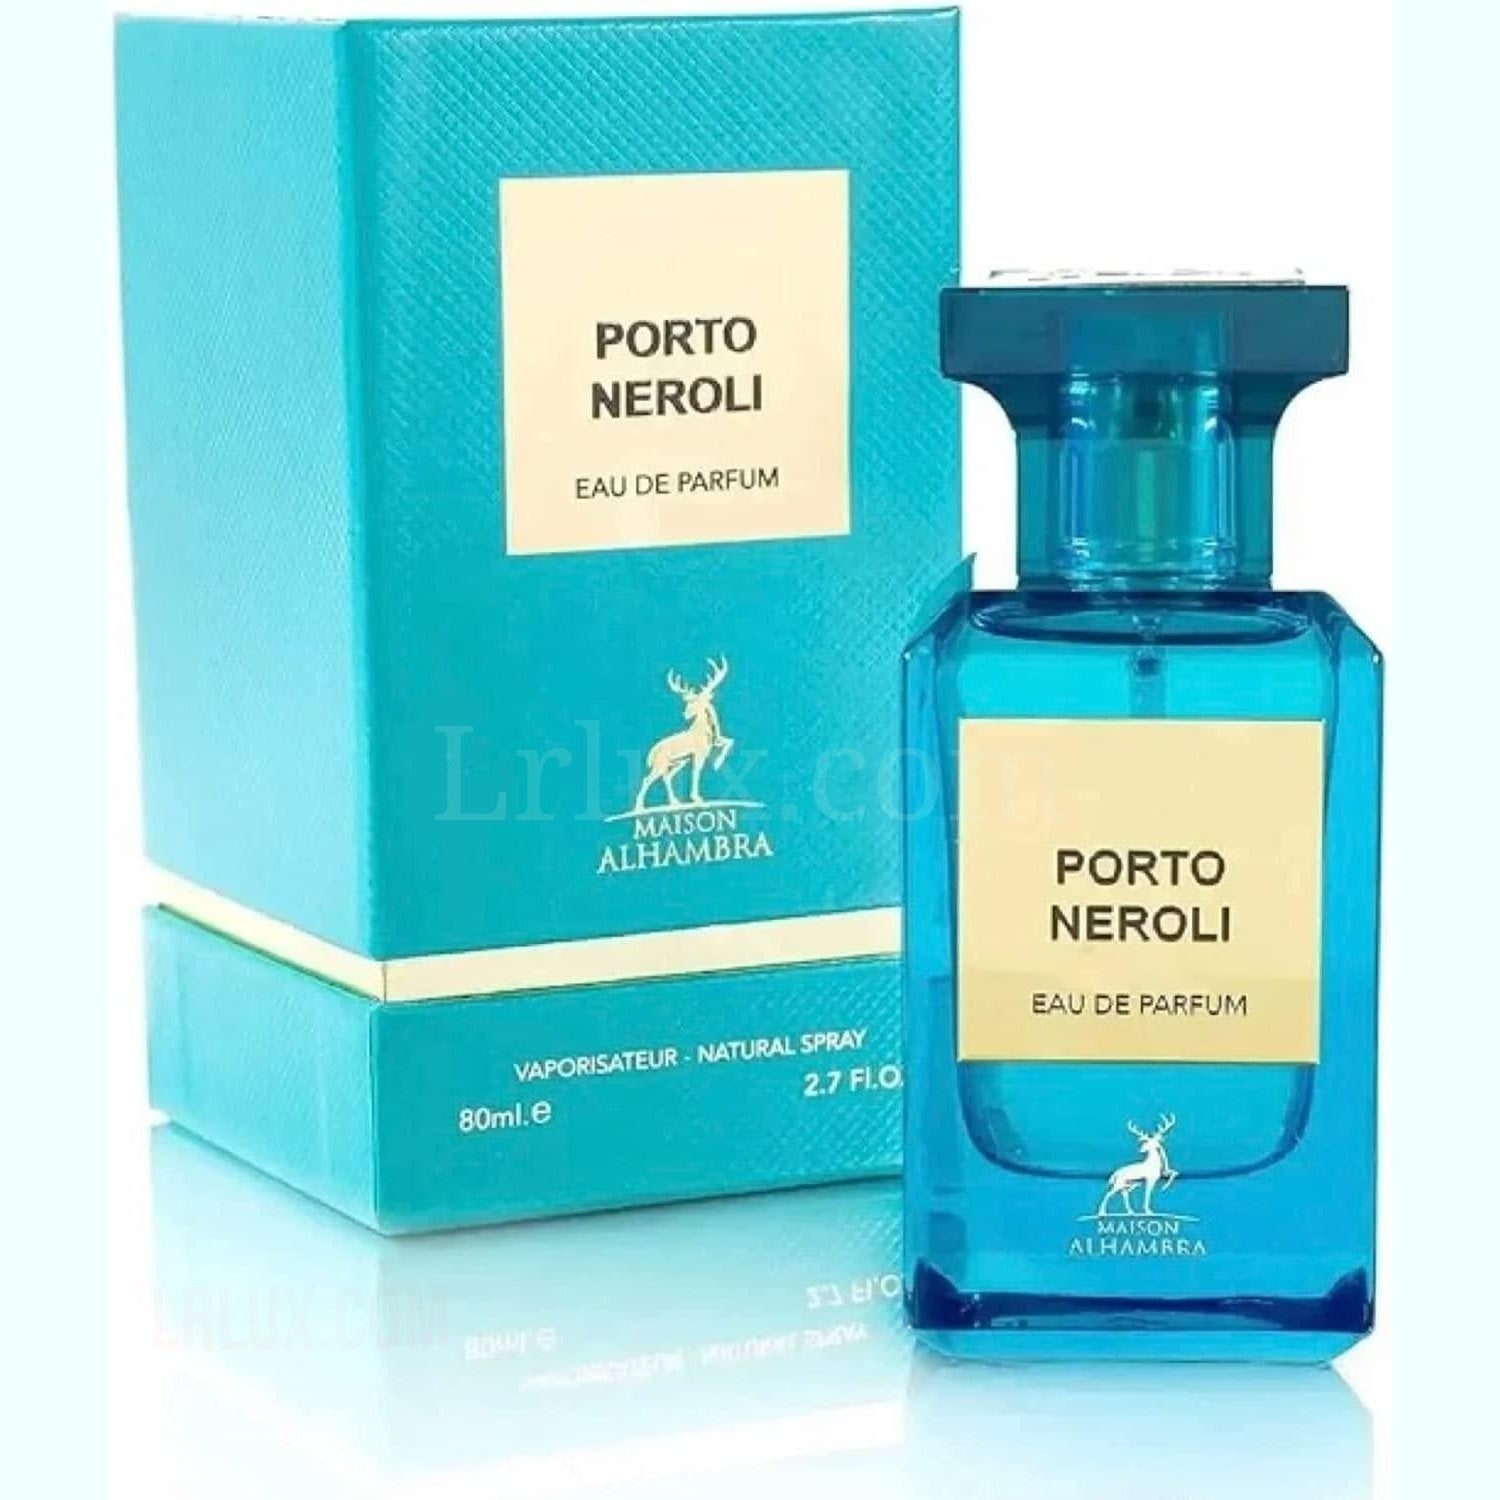 Porto Neroli Eau De Parfum 3.4 oz By Maison alhambra - Lrlux.com